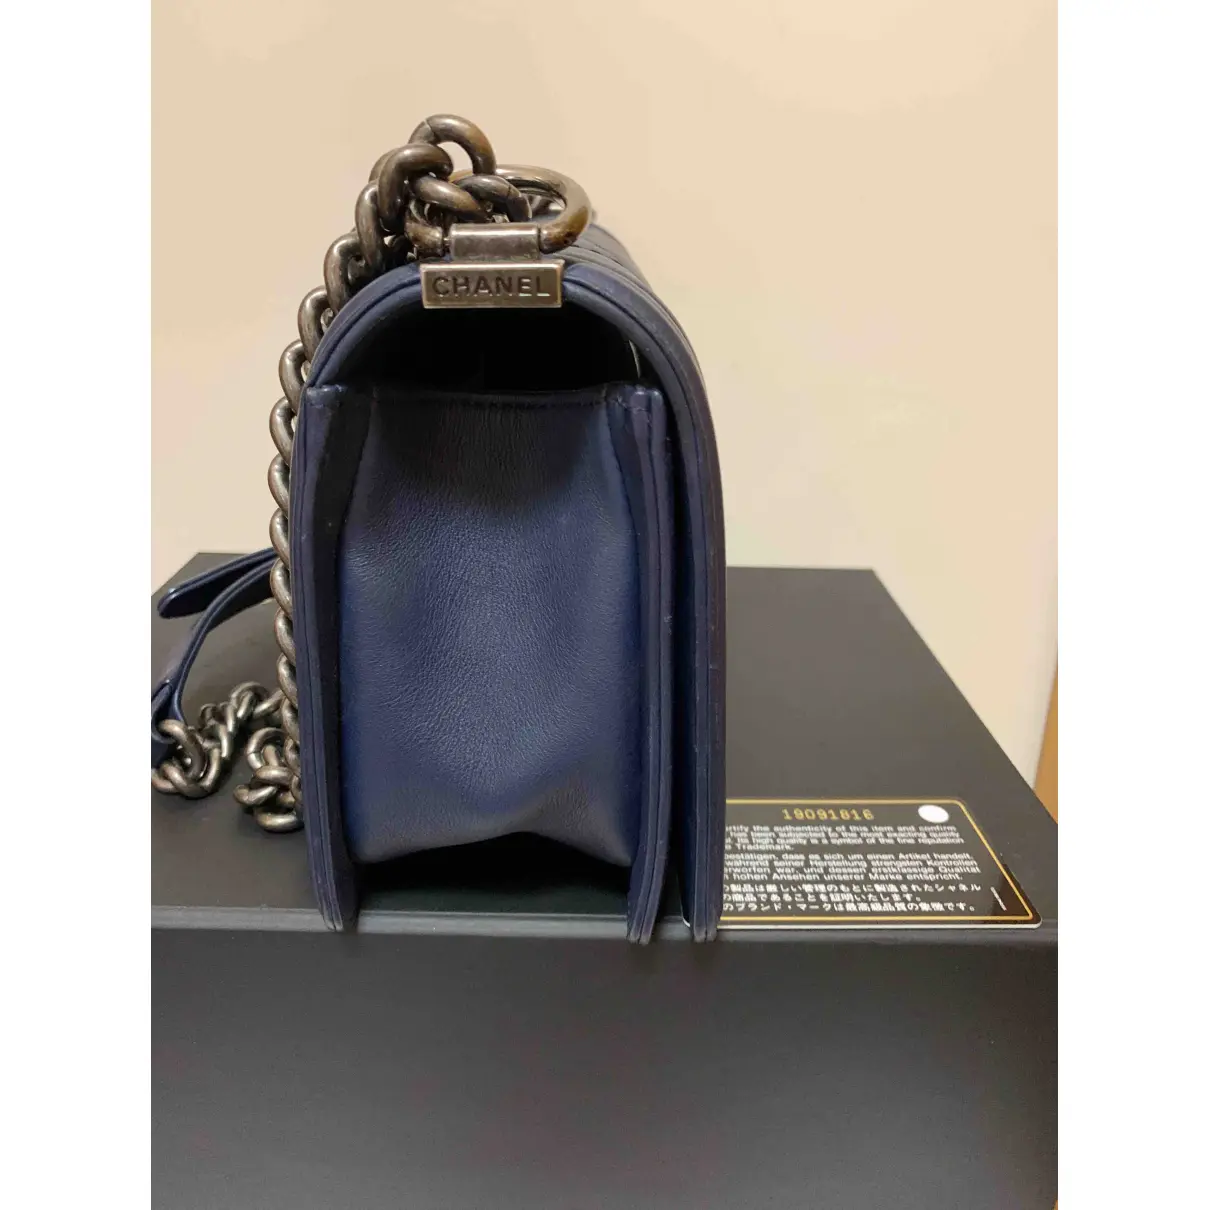 Buy Chanel Boy leather crossbody bag online